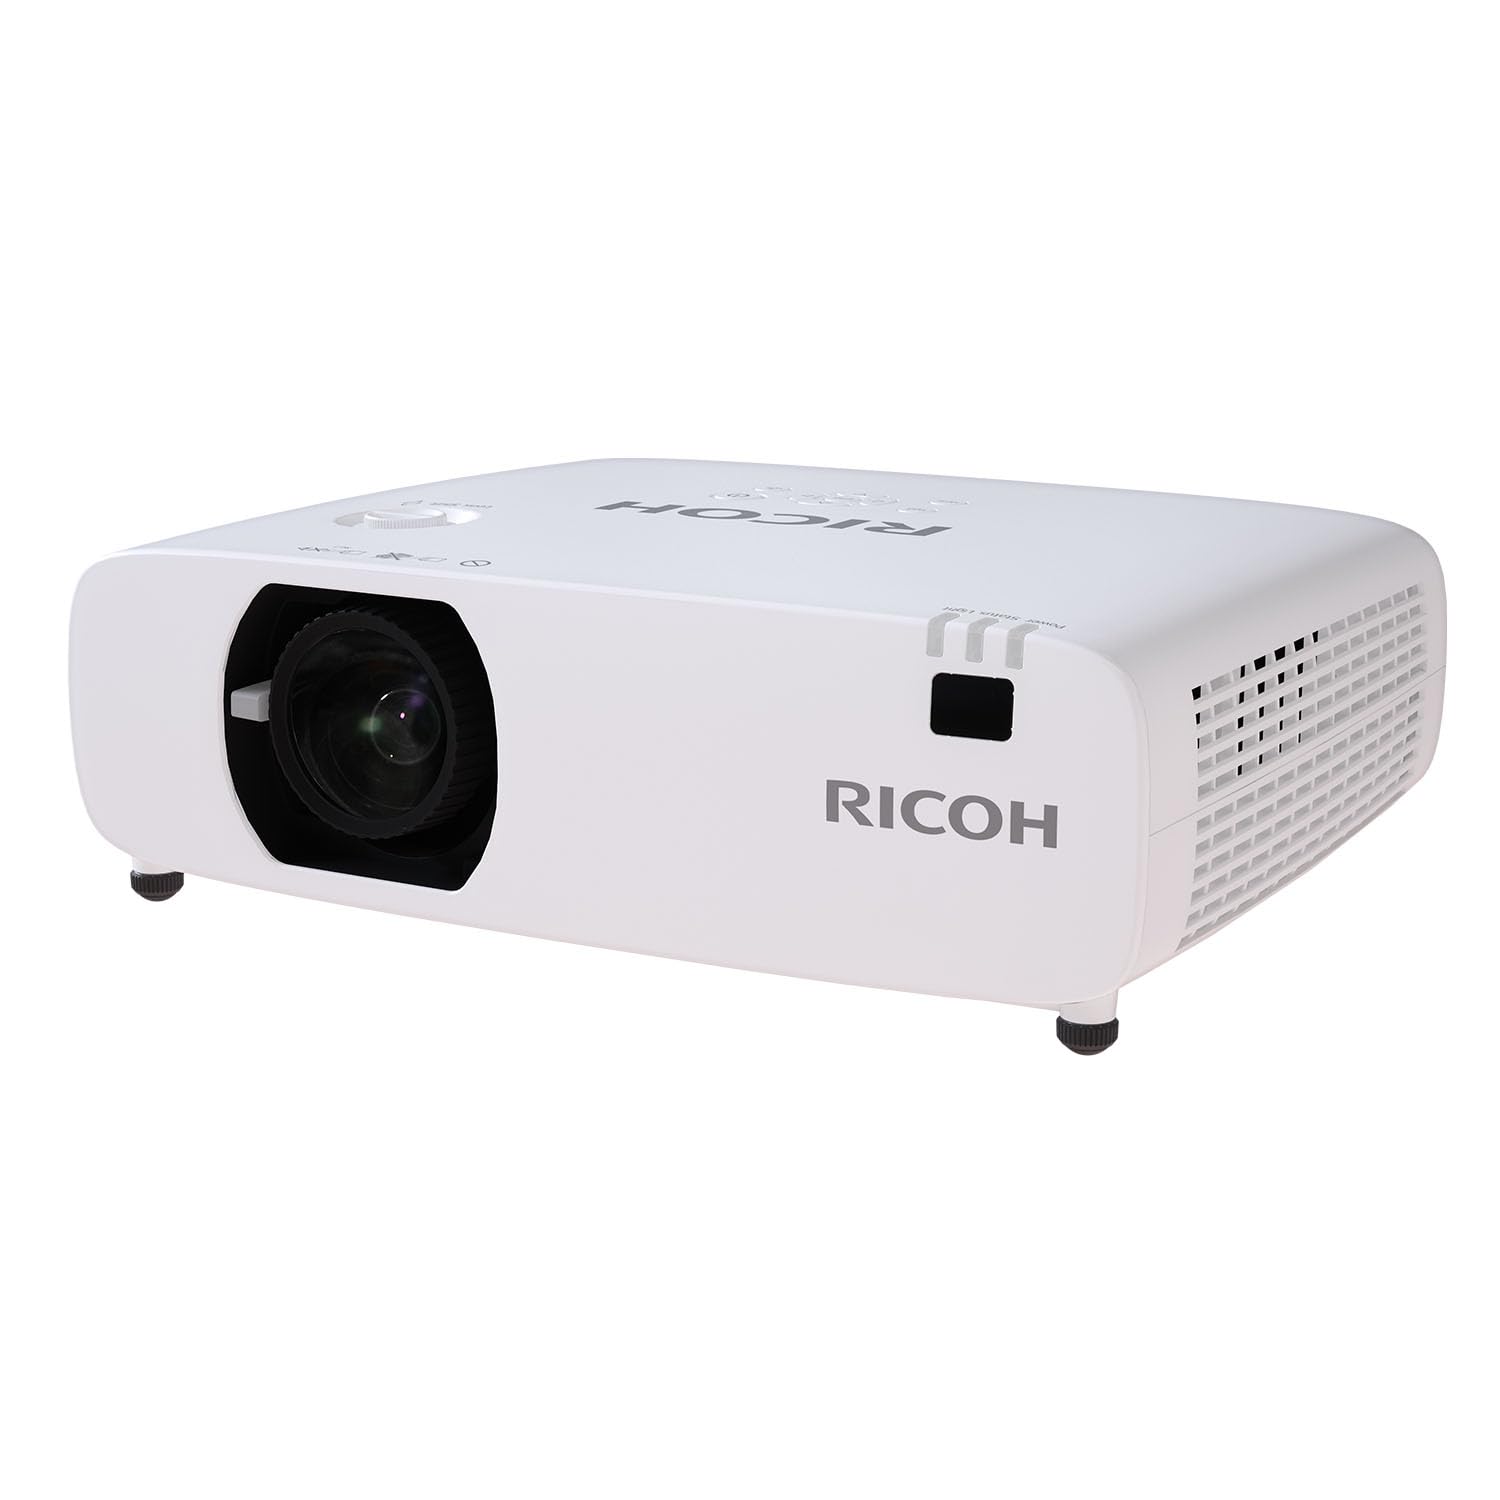 RICOH PJ WUL5A50 Compact 3LCD Laser Projector | 5200 Lumens | 1920x1200 WUXGA w/4K Input | 30-300